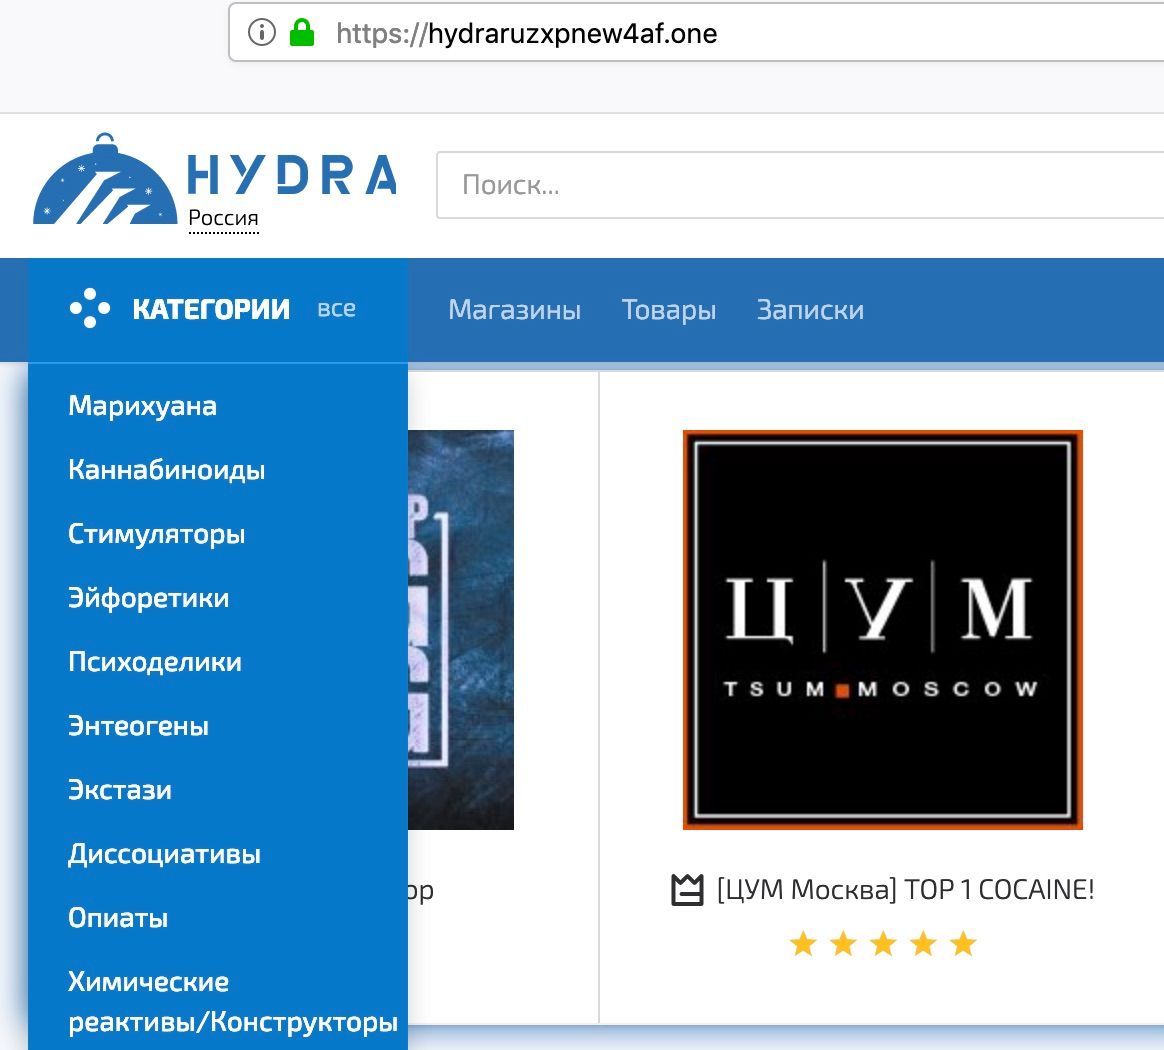 Браузер тор на андроид трешбокс hydraruzxpnew4af русский язык для браузера тор hyrda вход